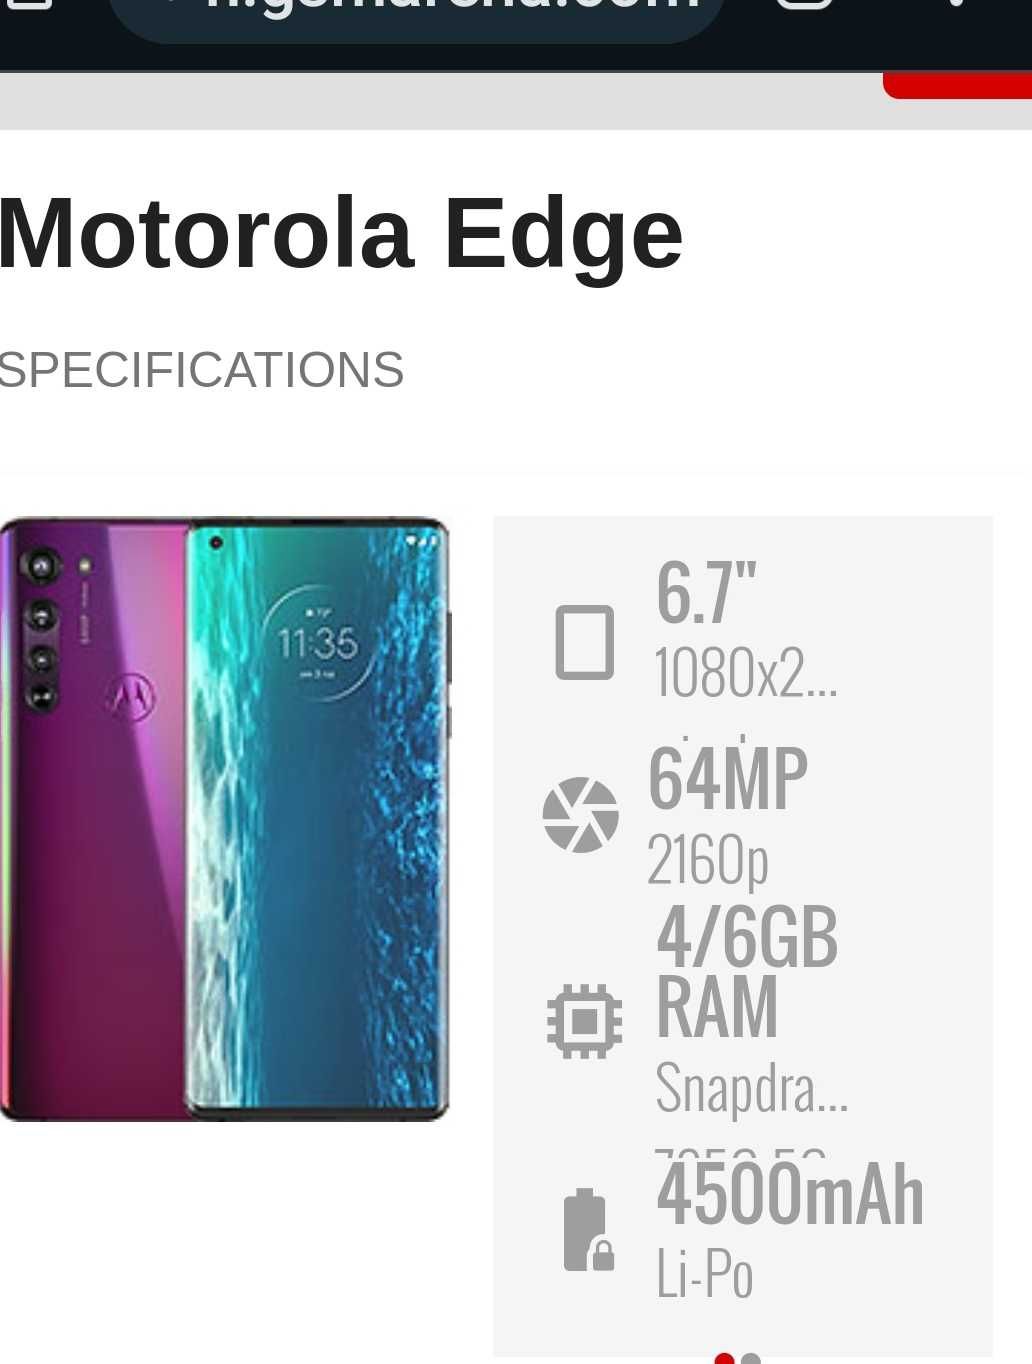 Moto Edge 256 gb